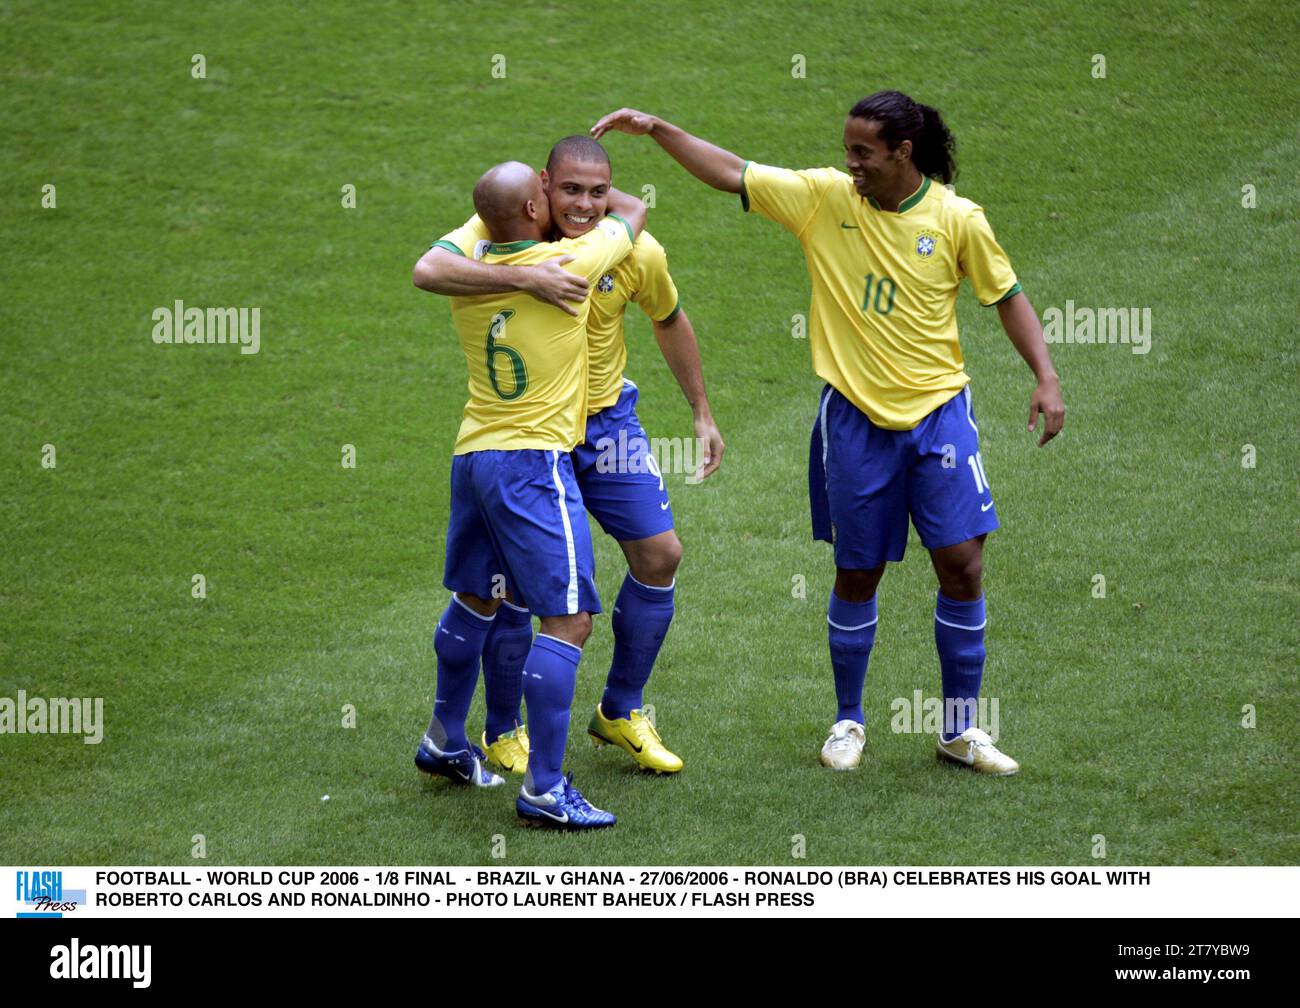 FOOTBALL - WORLD CUP 2006 - 1/8 FINAL - BRAZIL v GHANA - 27/06/2006 - RONALDO (BRA) CELEBRATES HIS GOAL WITH ROBERO CARLOS AND RONALDINHO - PHOTO LAURENT BAHEUX / FLASH PRESS Stock Photo